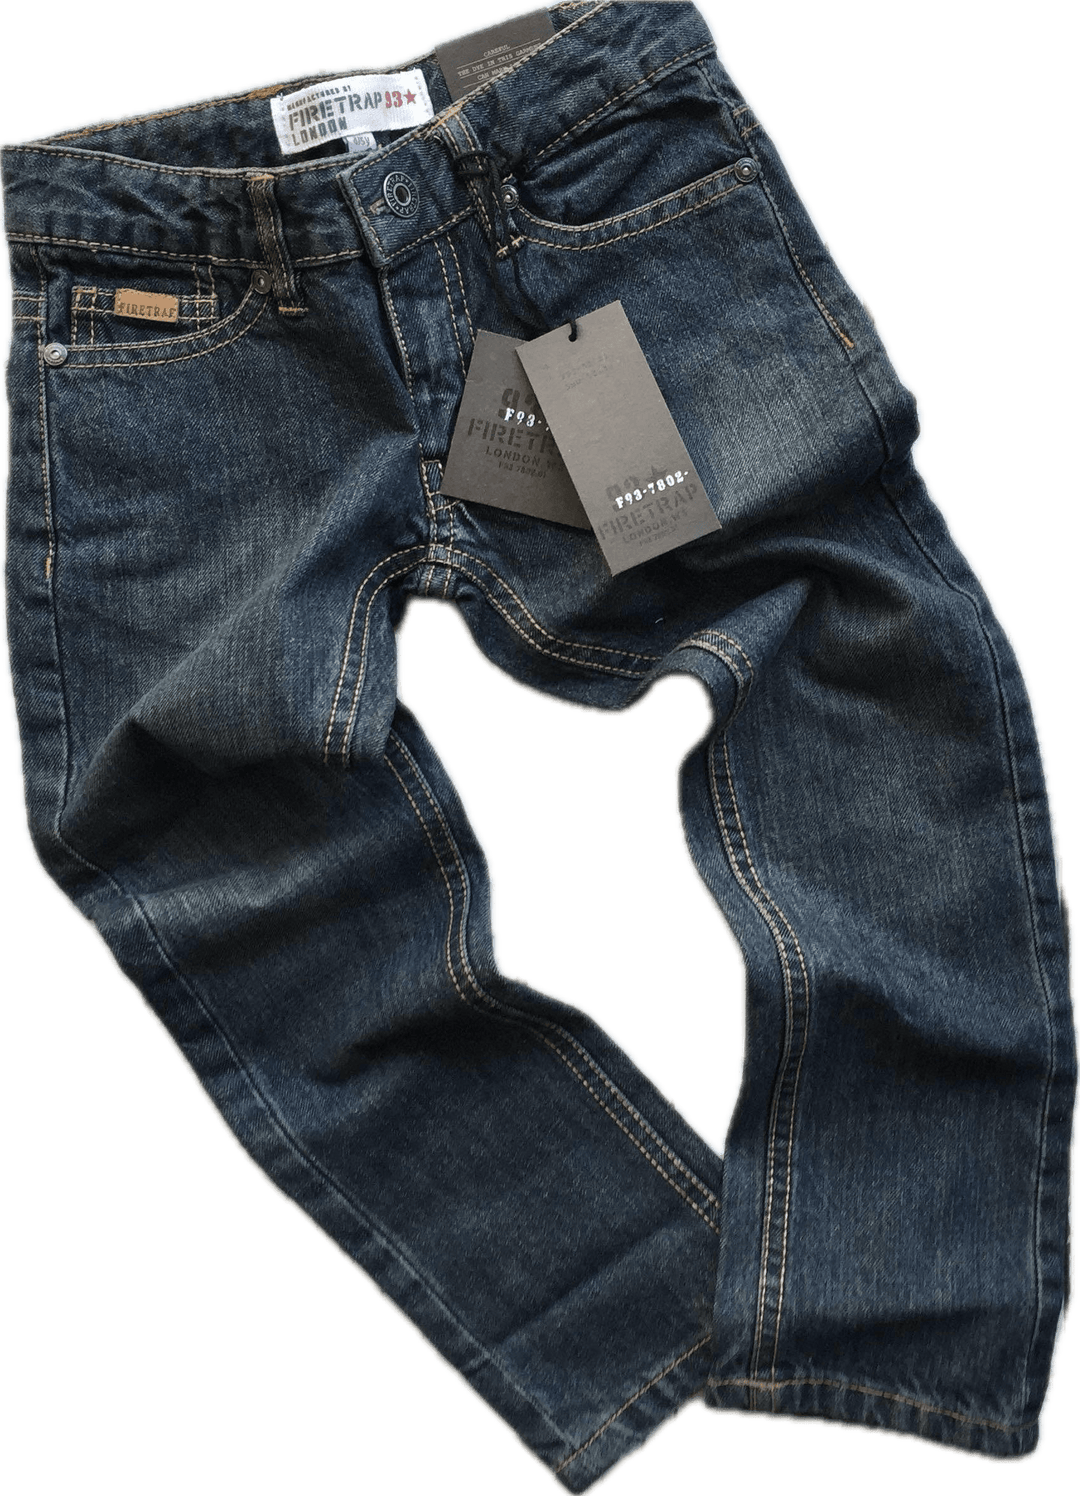 NWT - Firetrap Boys Skinny Jeans - Size 4/5 - Jean Pool